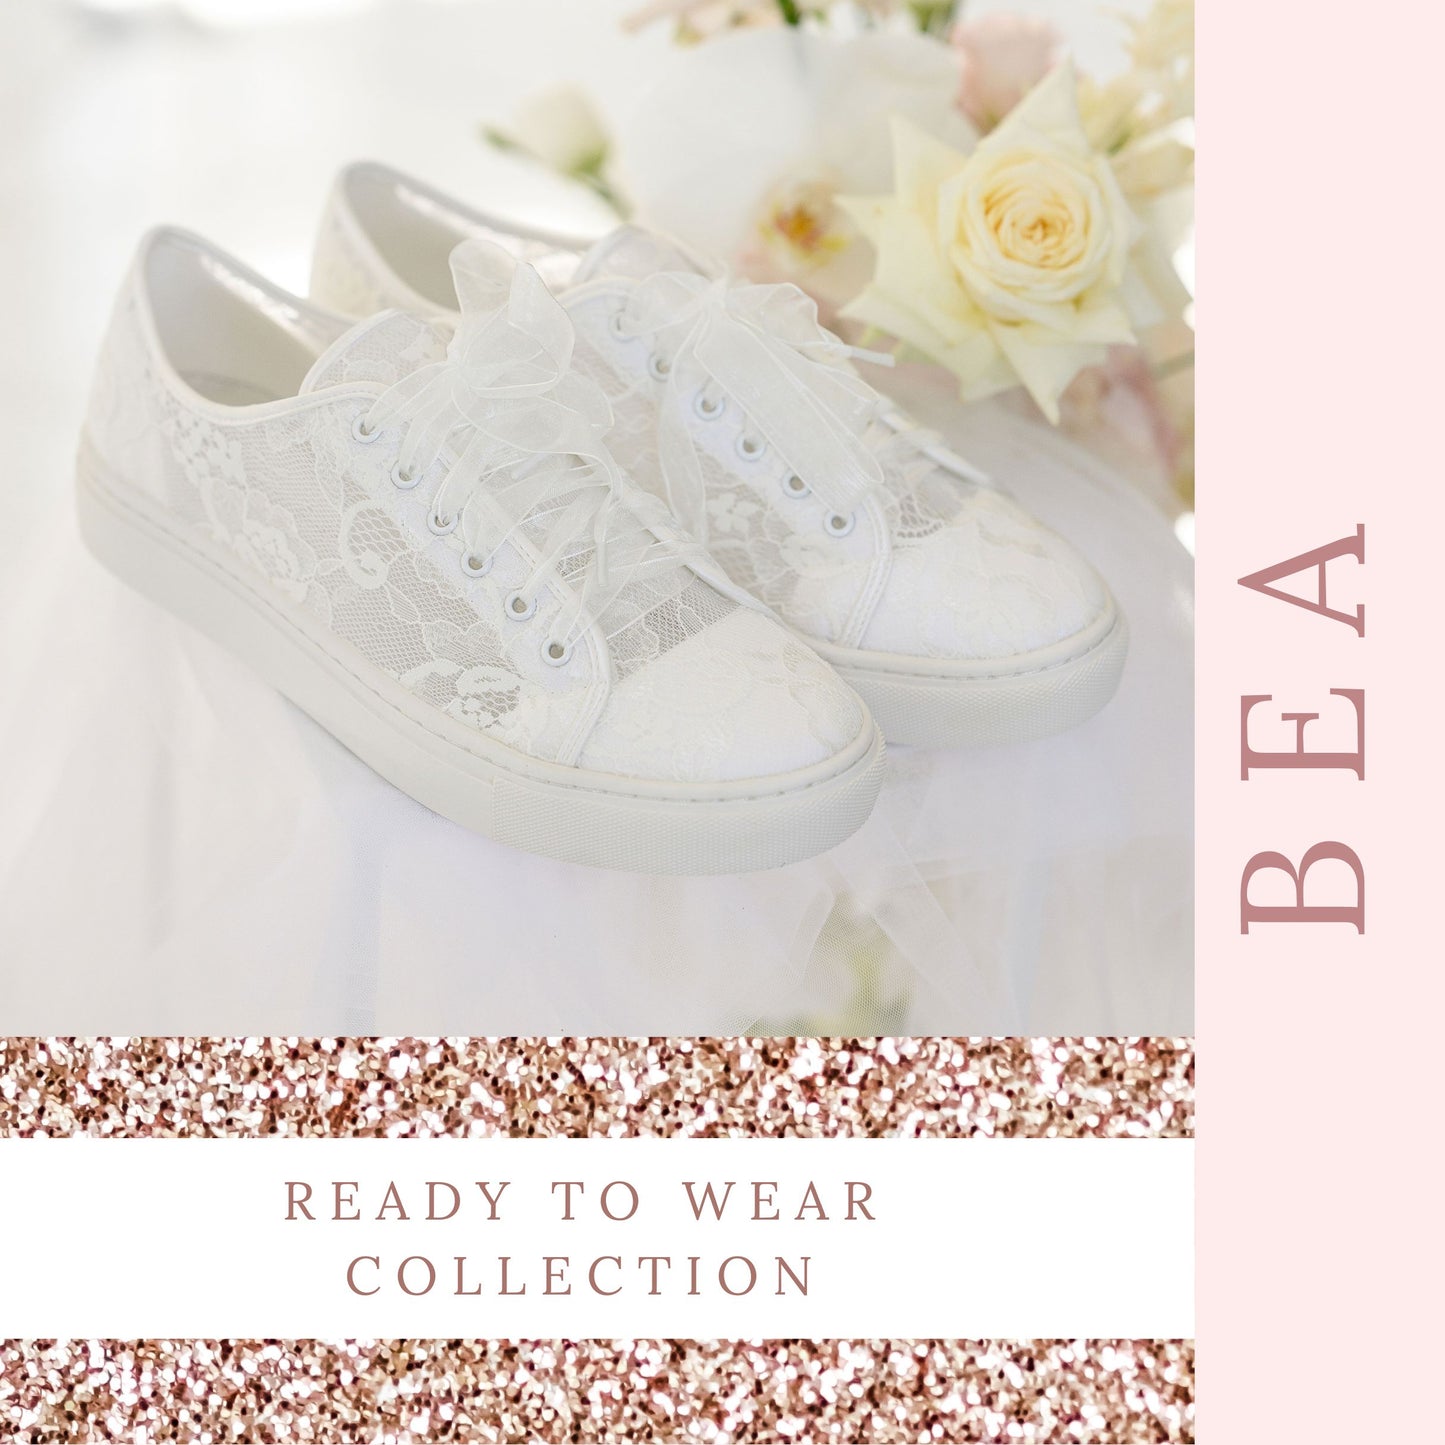 flat-wedding-shoes